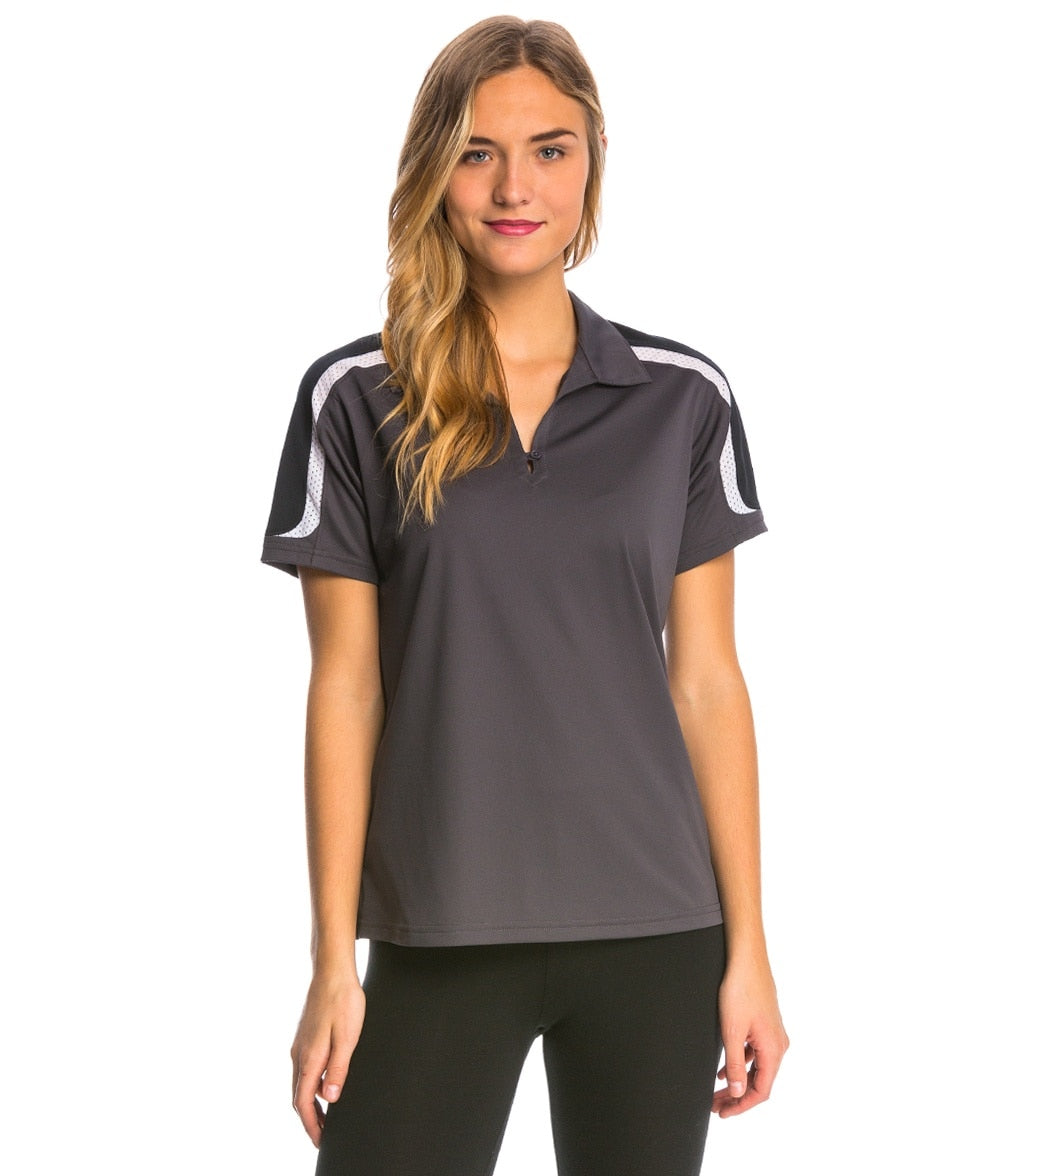 Women's Tech Polo Shirt - Iron Grey/Black/White 3Xl Polyester - Swimoutlet.com